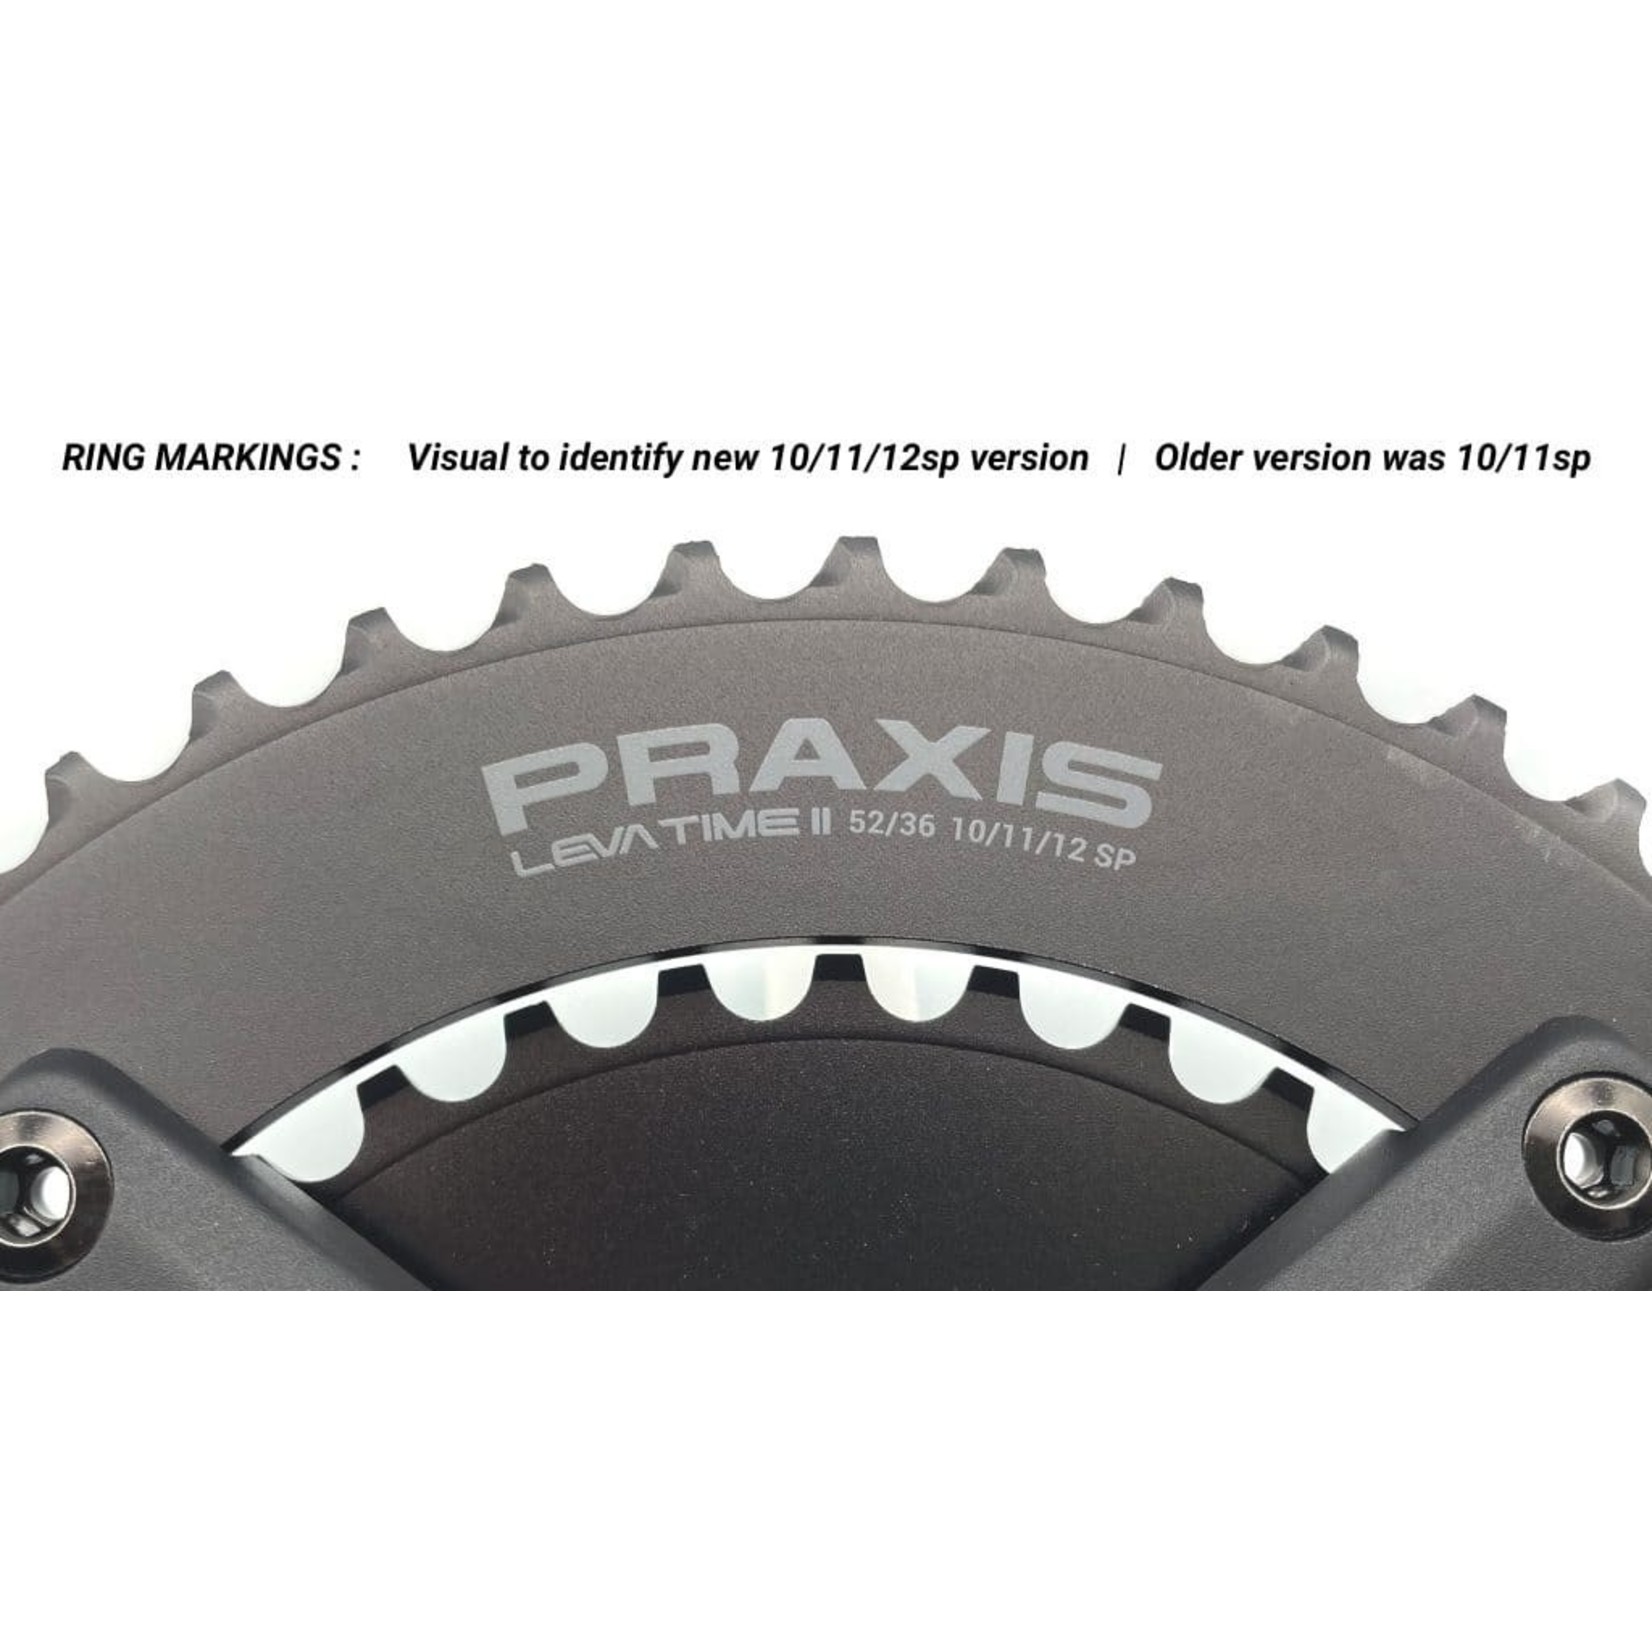 Praxis Praxis Road cranks - Alba - Alloy,165mm 48/32